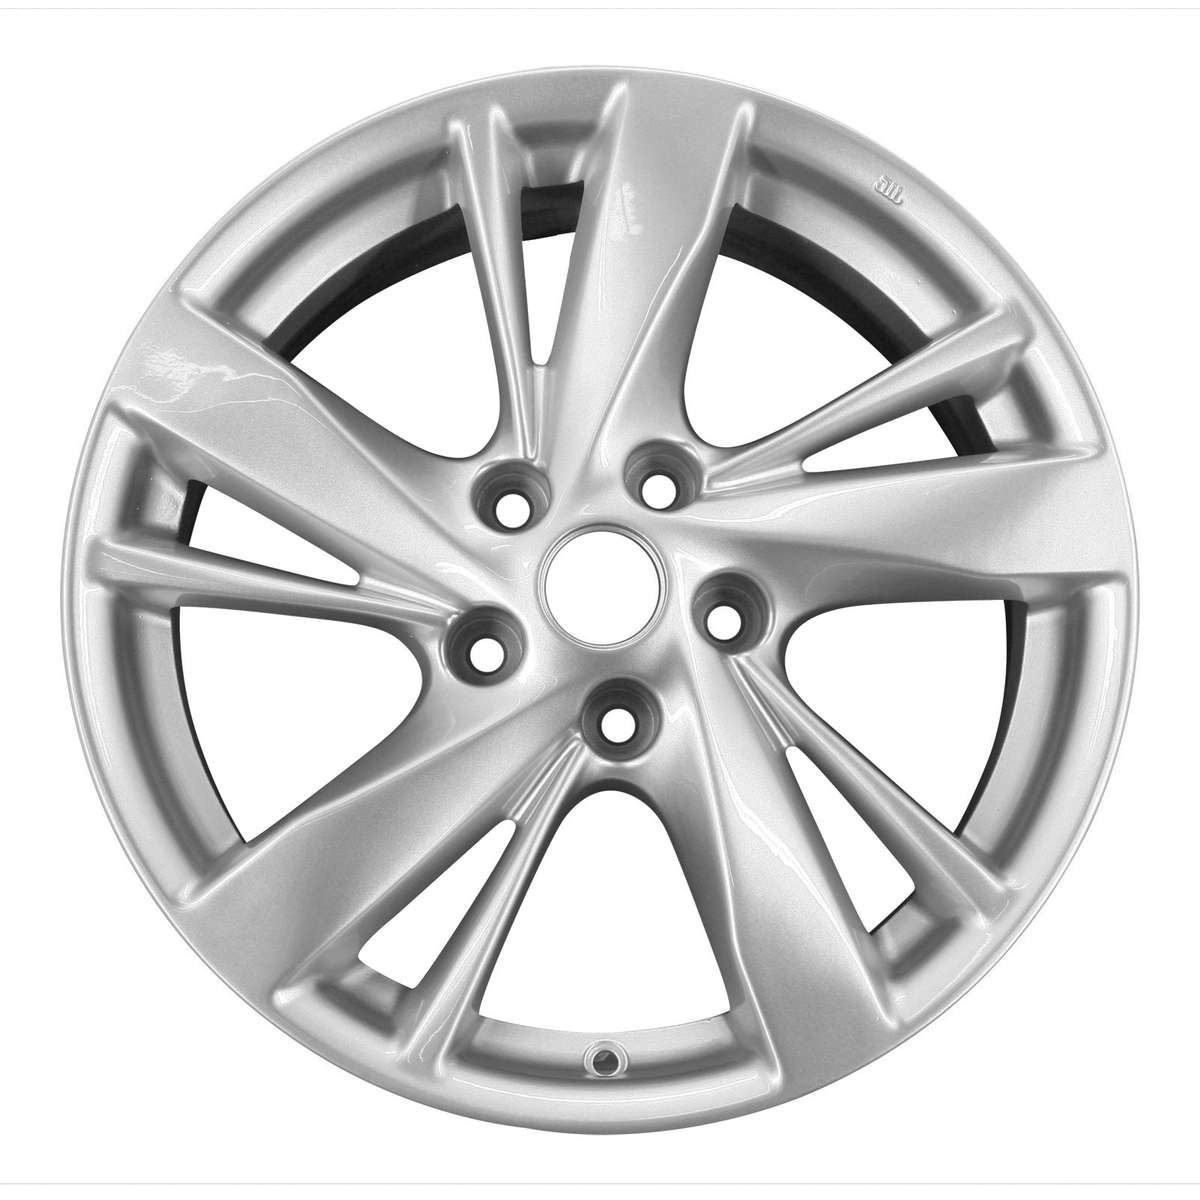 2013 Nissan Altima New 17" Replacement Wheel Rim RW62593S